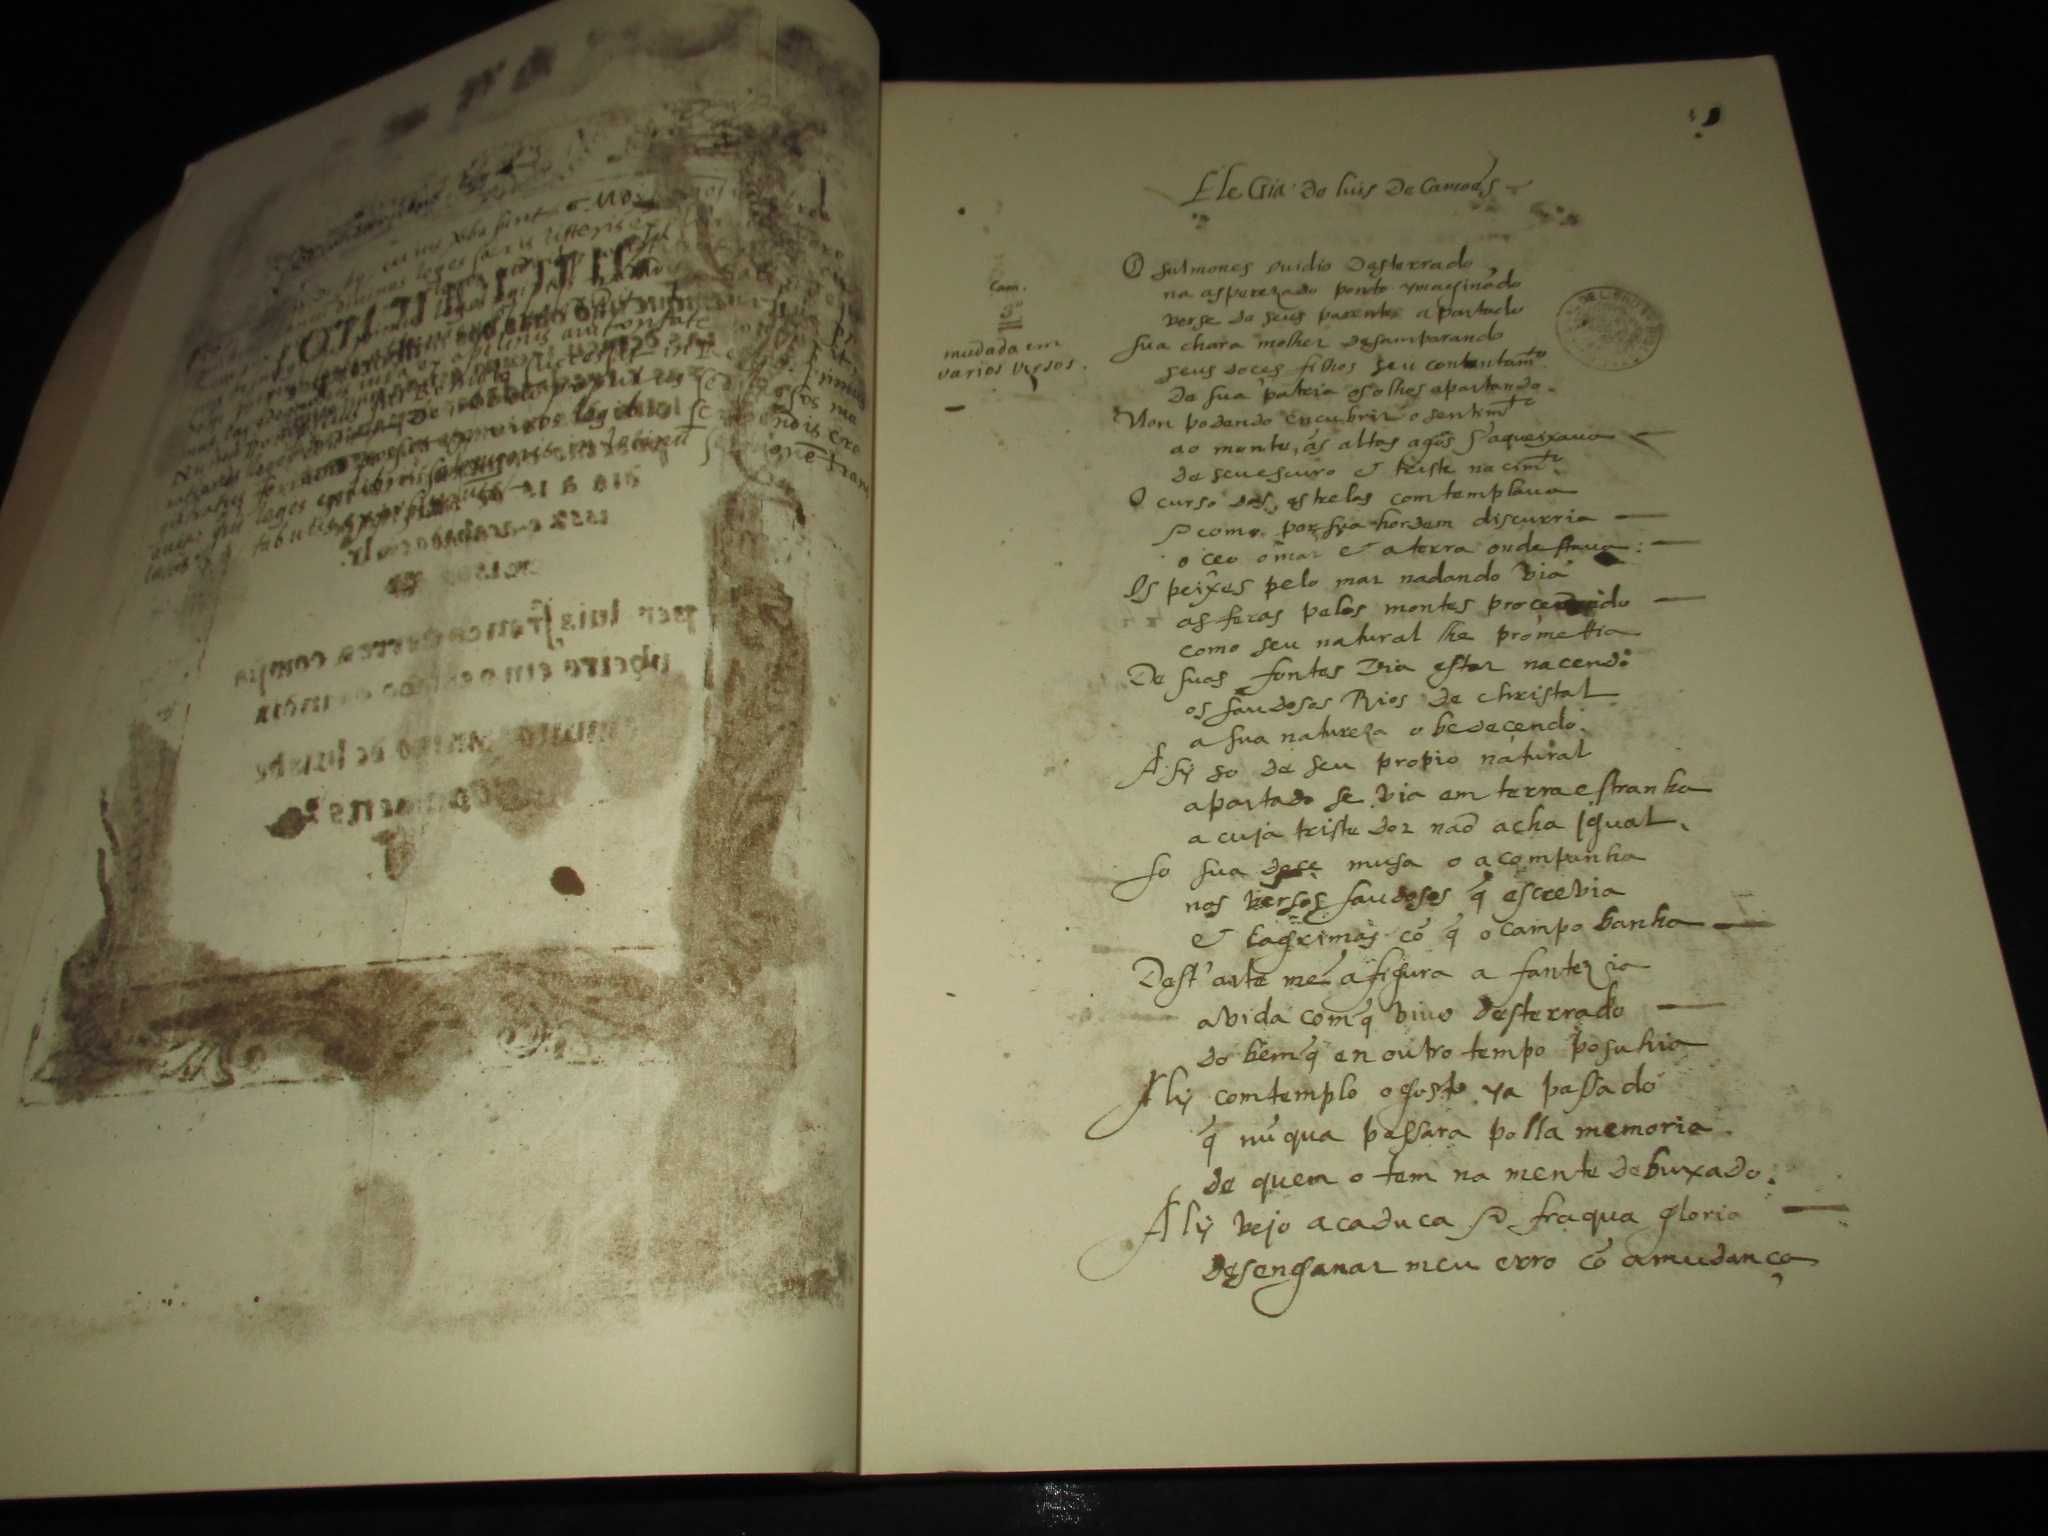 Livro Cancioneiro de Luís Franco Correa 1557 a 1589